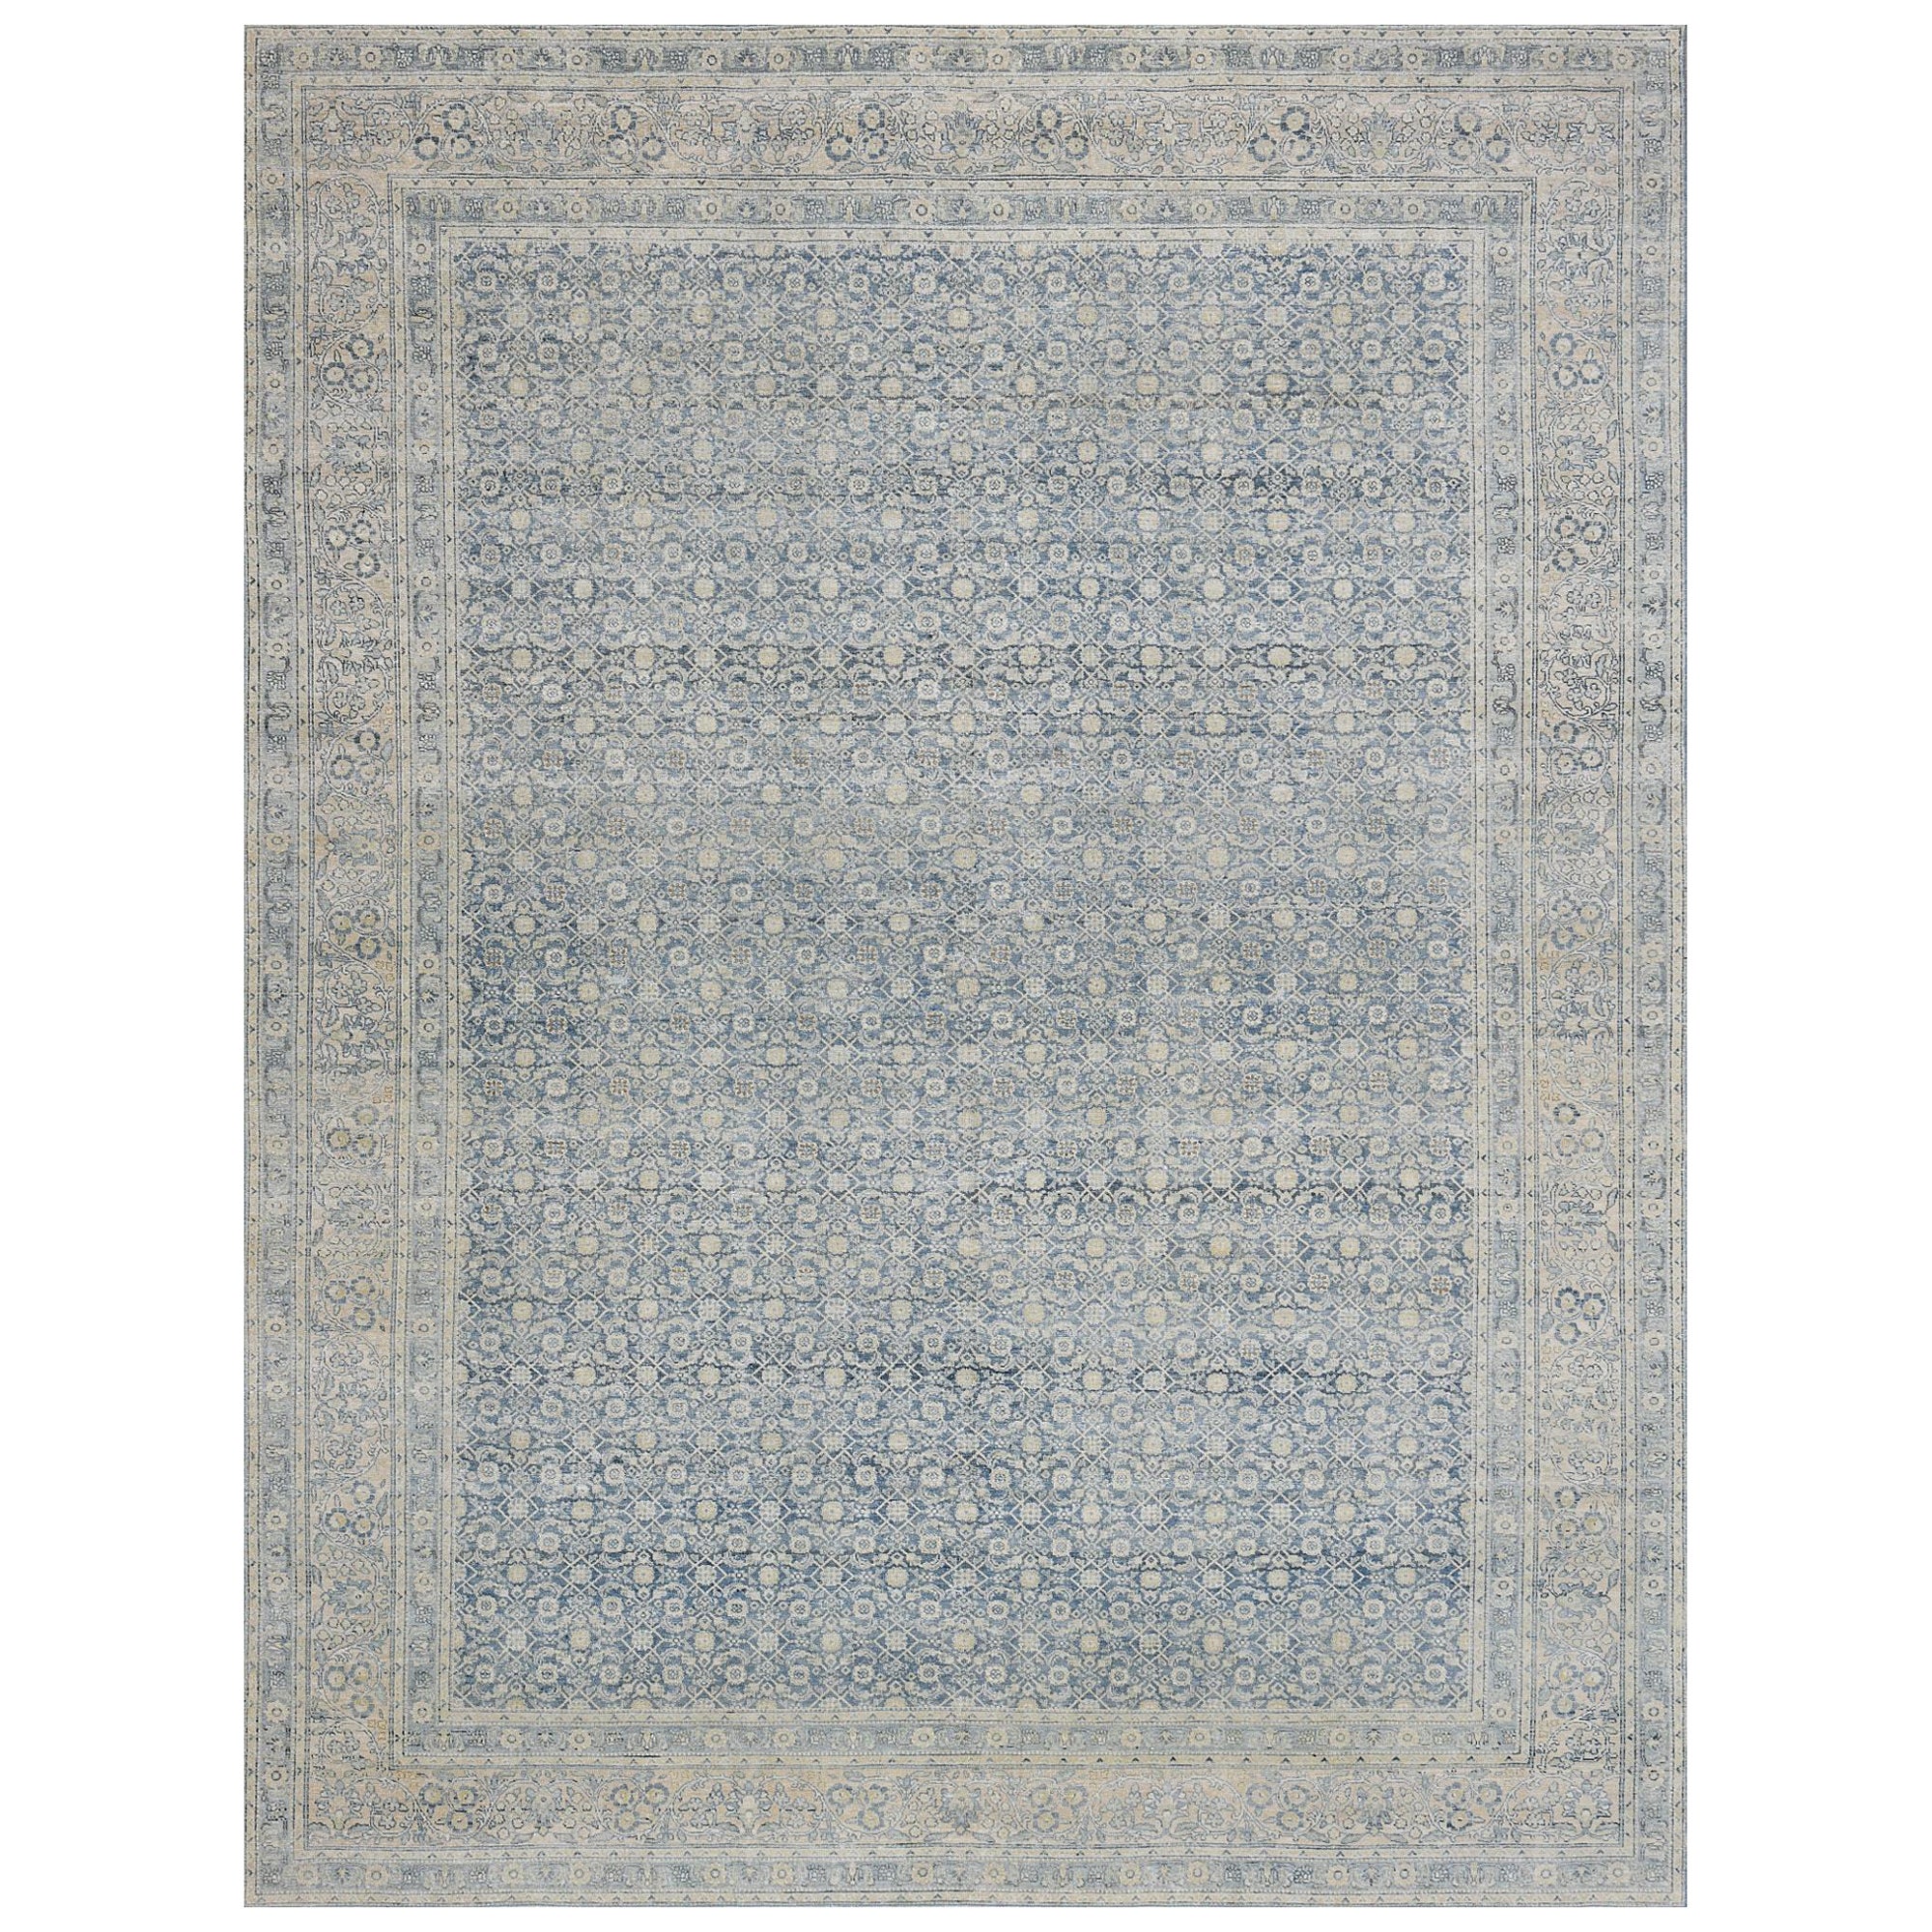 Circa-1910 Hand-woven Blue Wool Persian Tabriz Rug